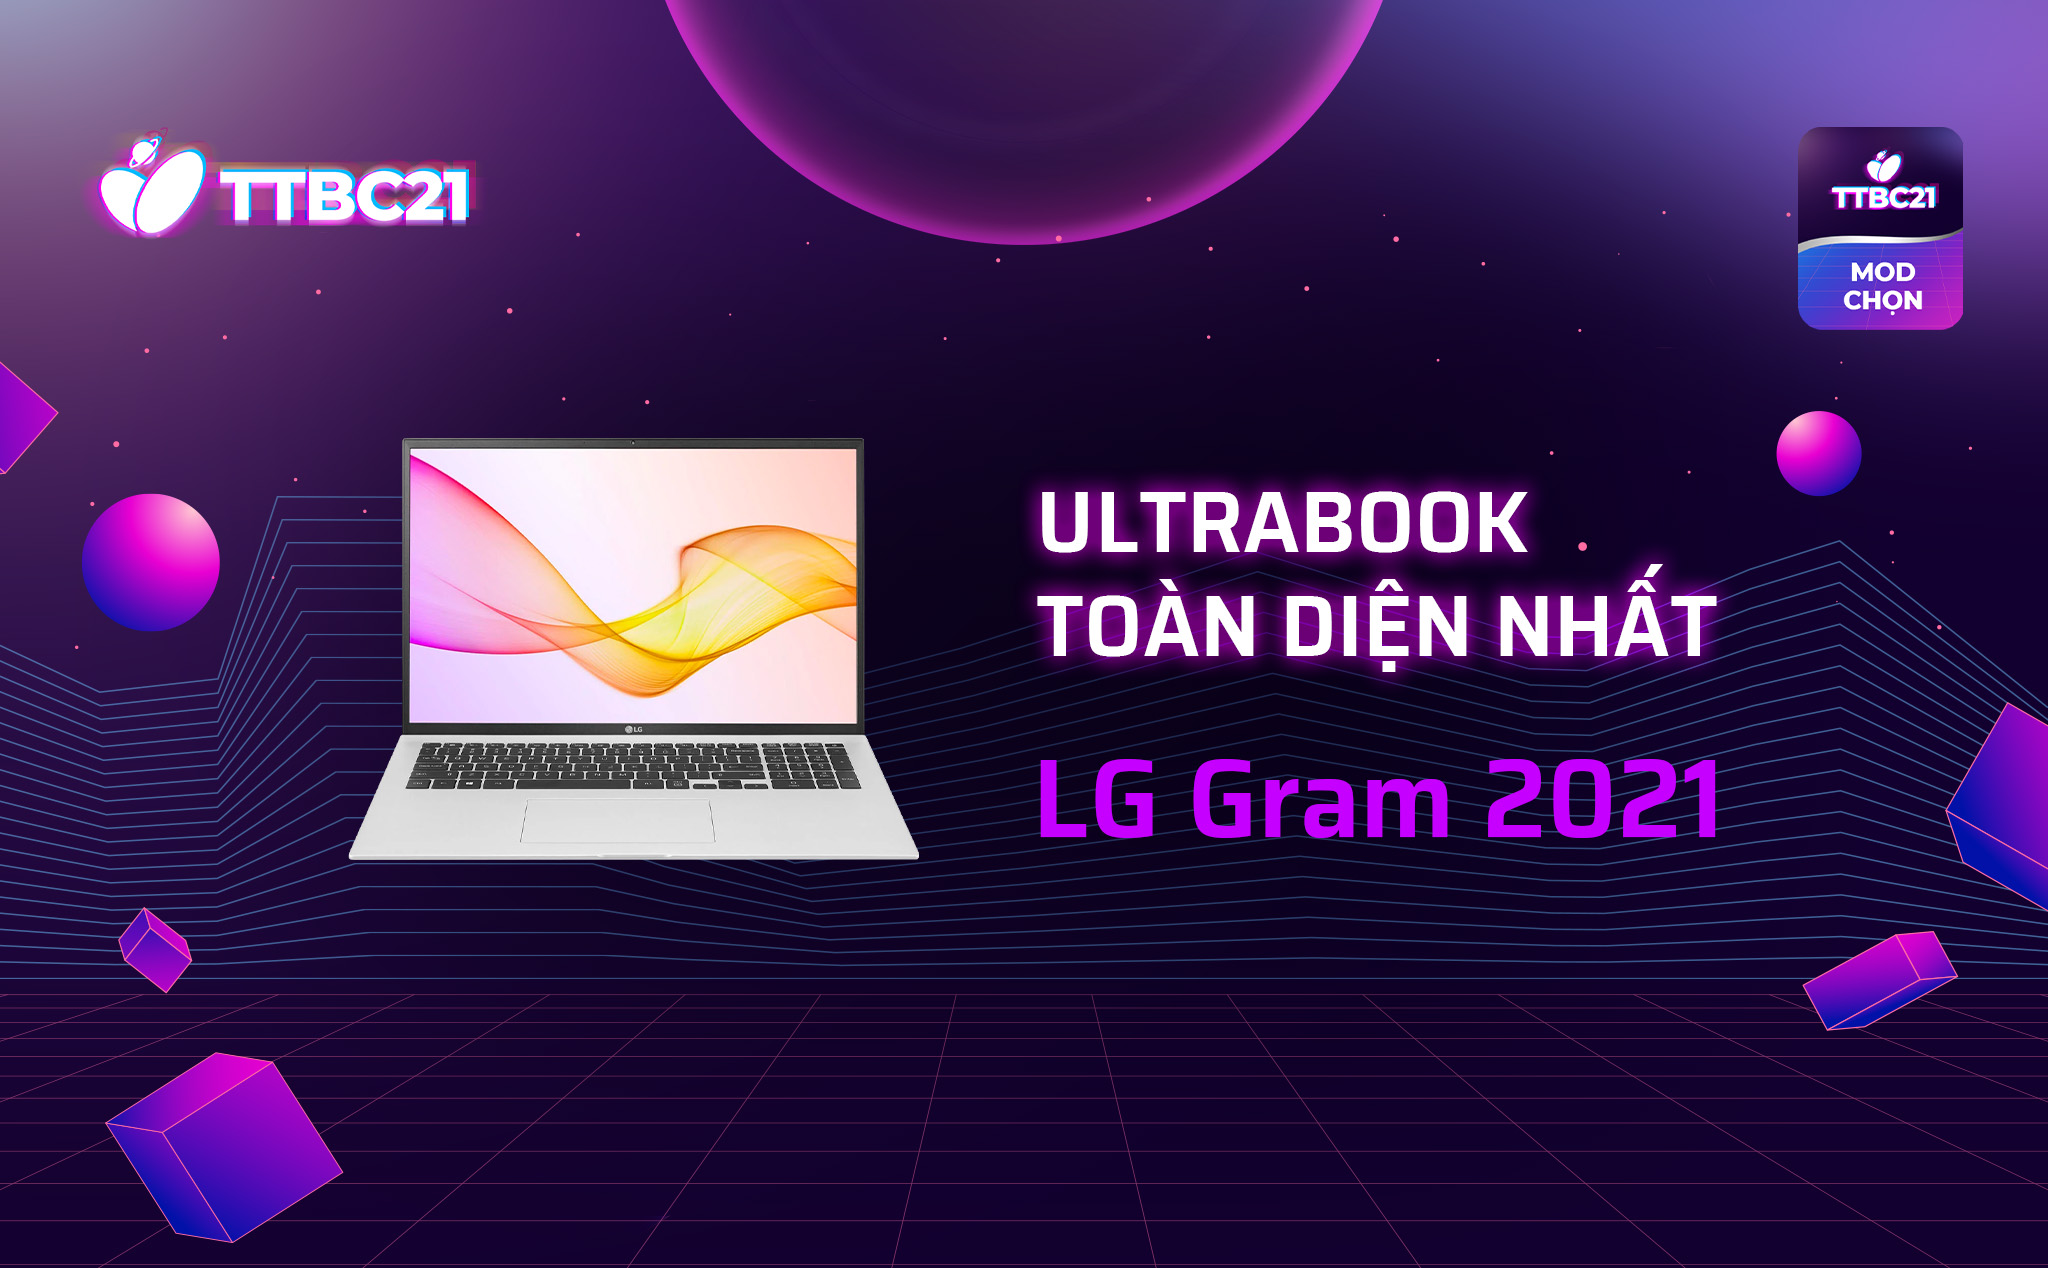 TTBC21 - Mod Choice - Ultrabook toàn diện nhất - LG Gram 2021